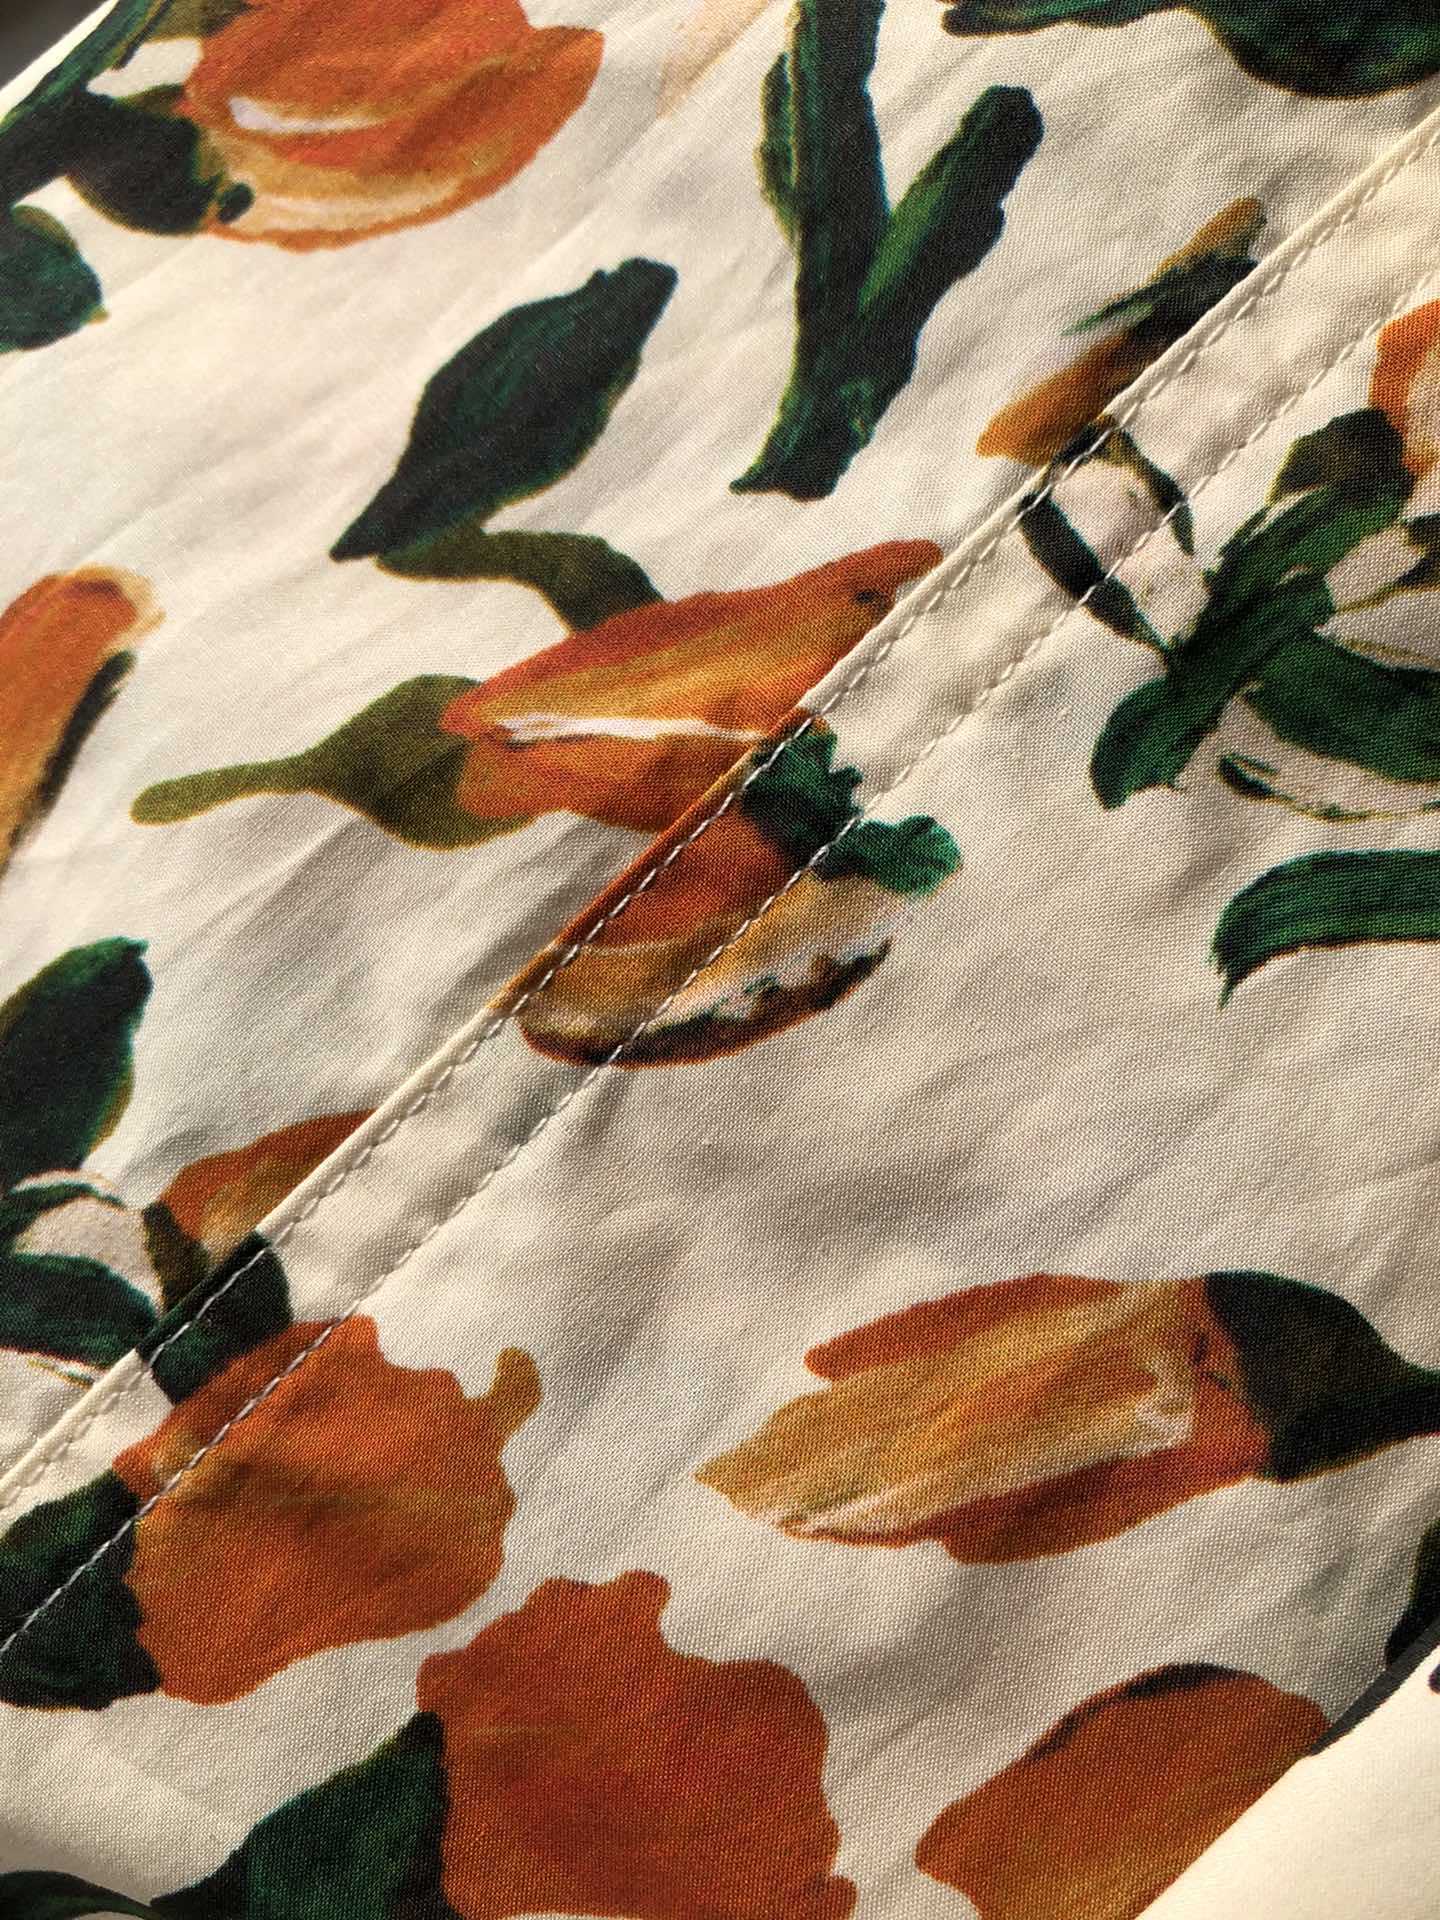 Oil Painting Style Tulip Print Elastic Waist A-Line Skirt